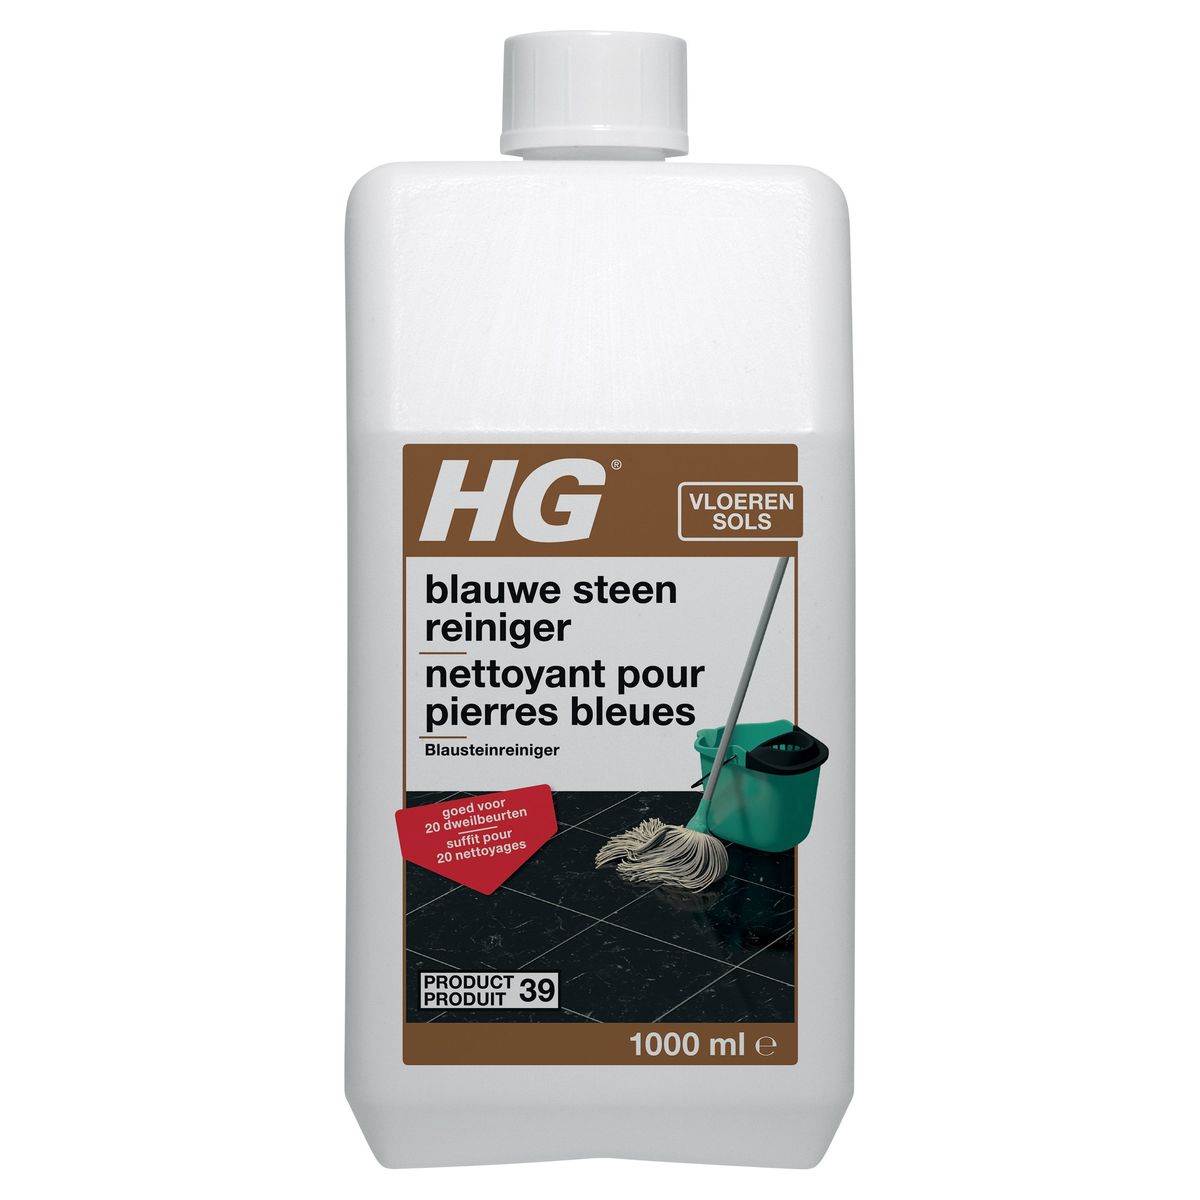 HG Blauwe Steen Reiniger Product 39 1000 ml